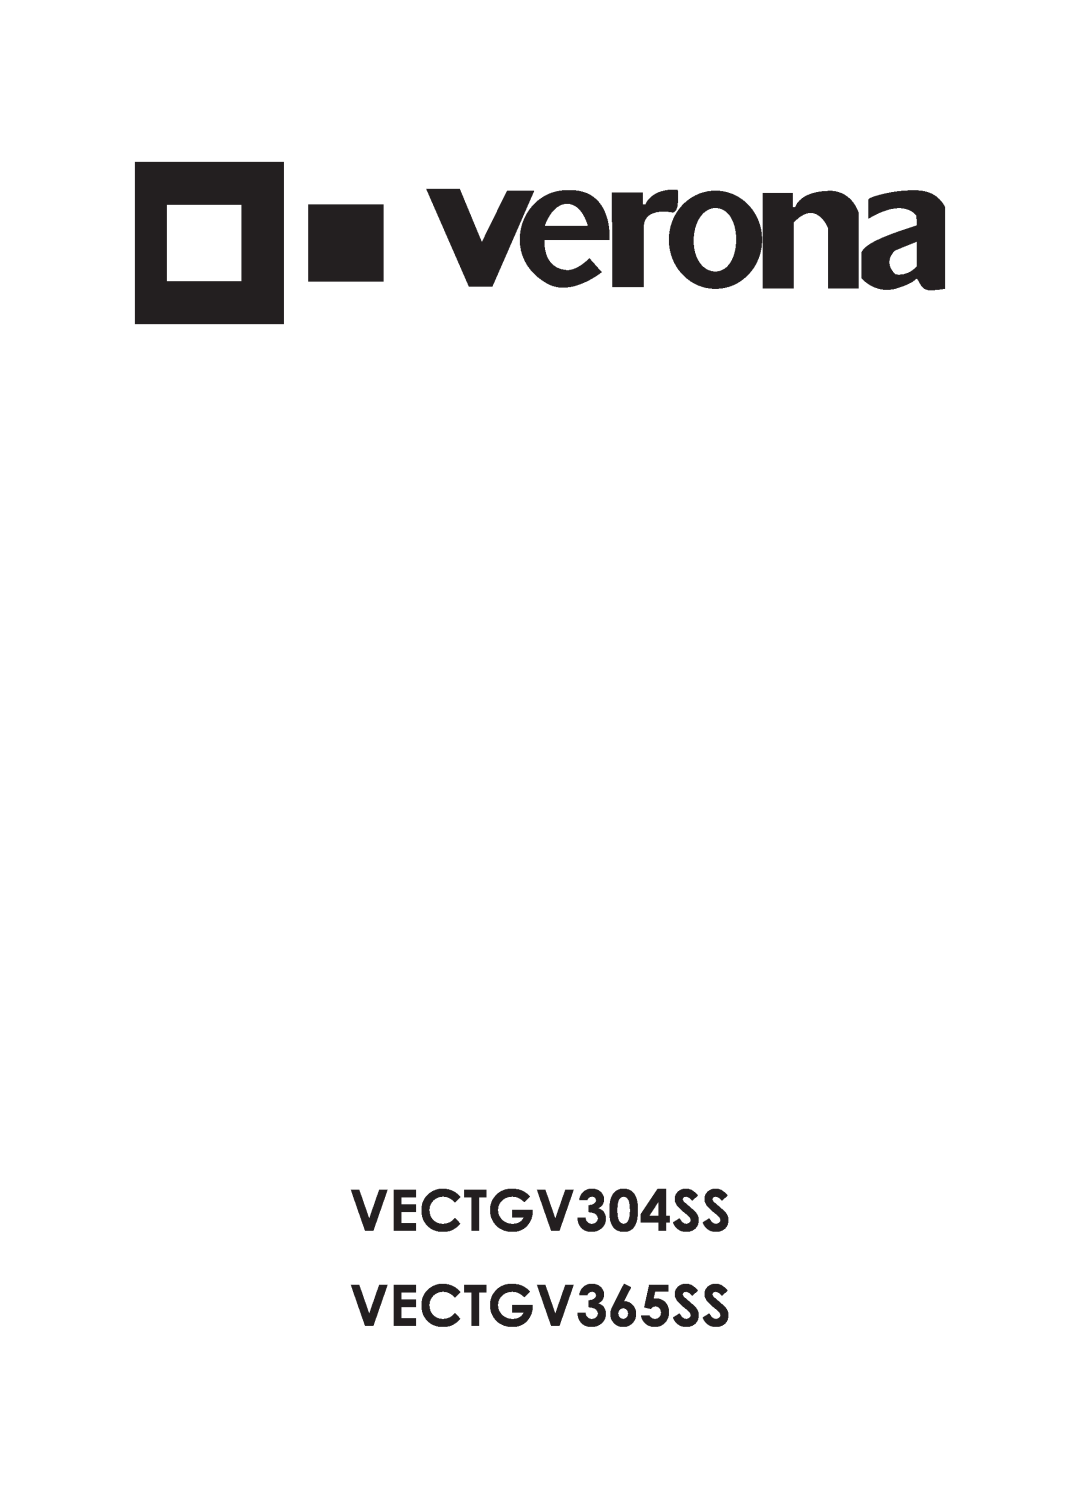 Verona manual VECTGV304SS VECTGV365SS 